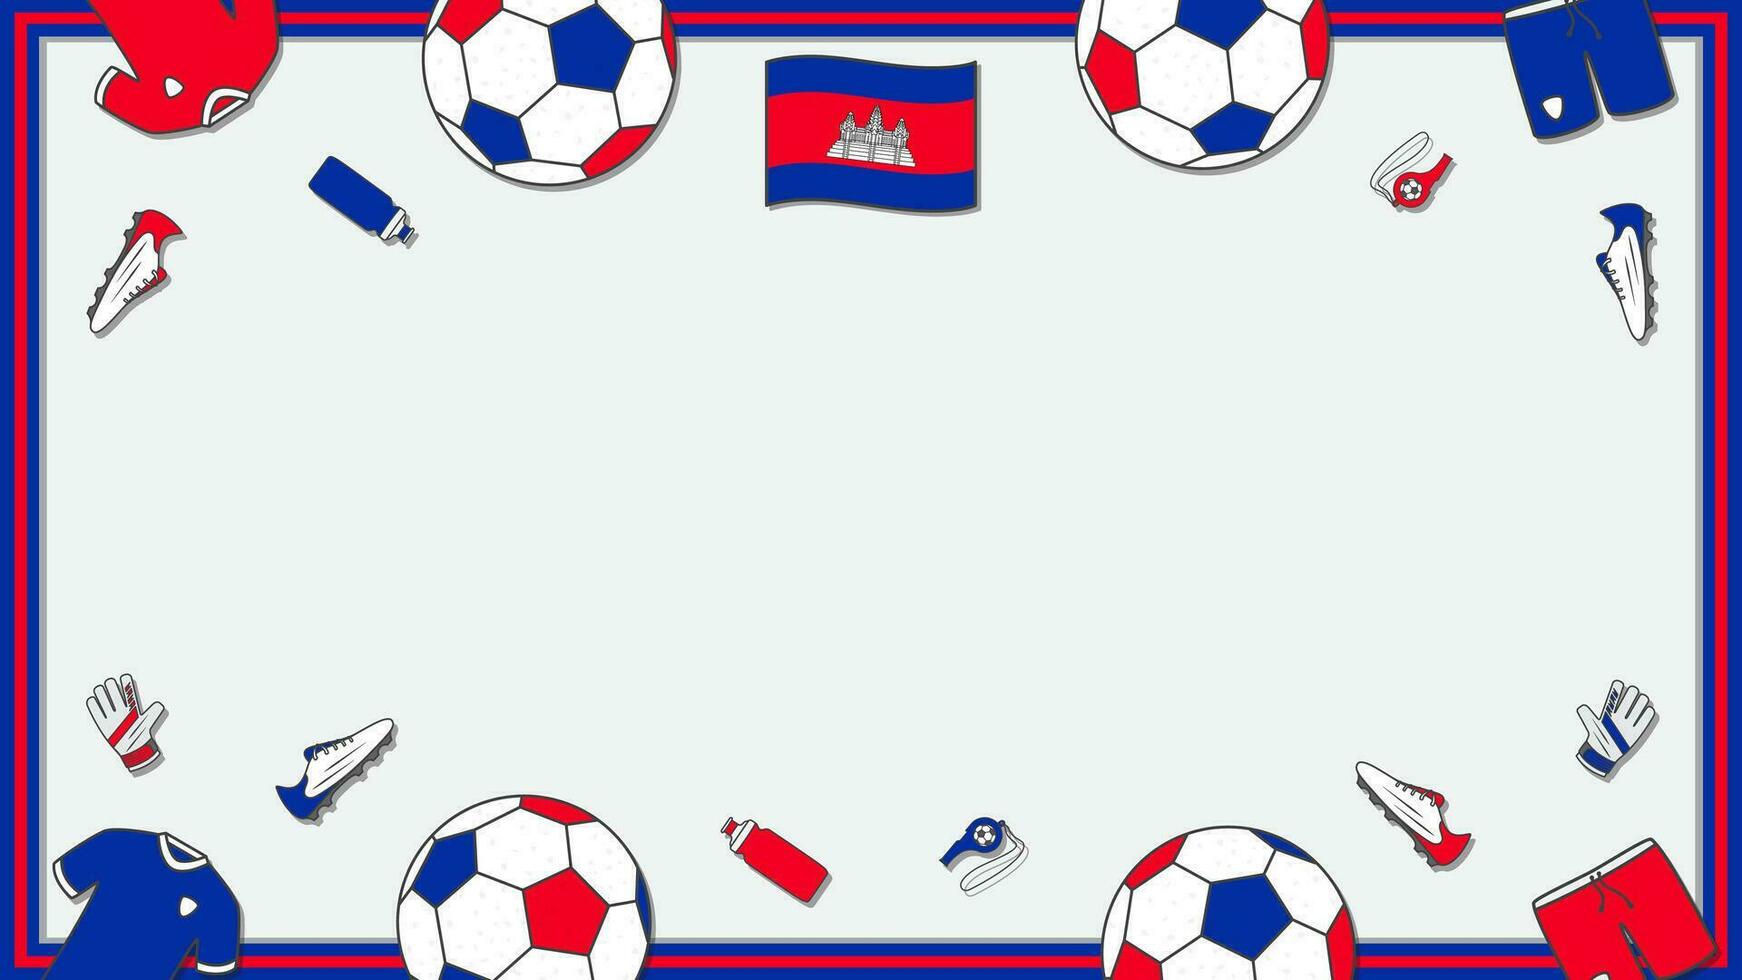 Football Background Design Template. Football Cartoon Vector Illustration. Championship In Cambodia